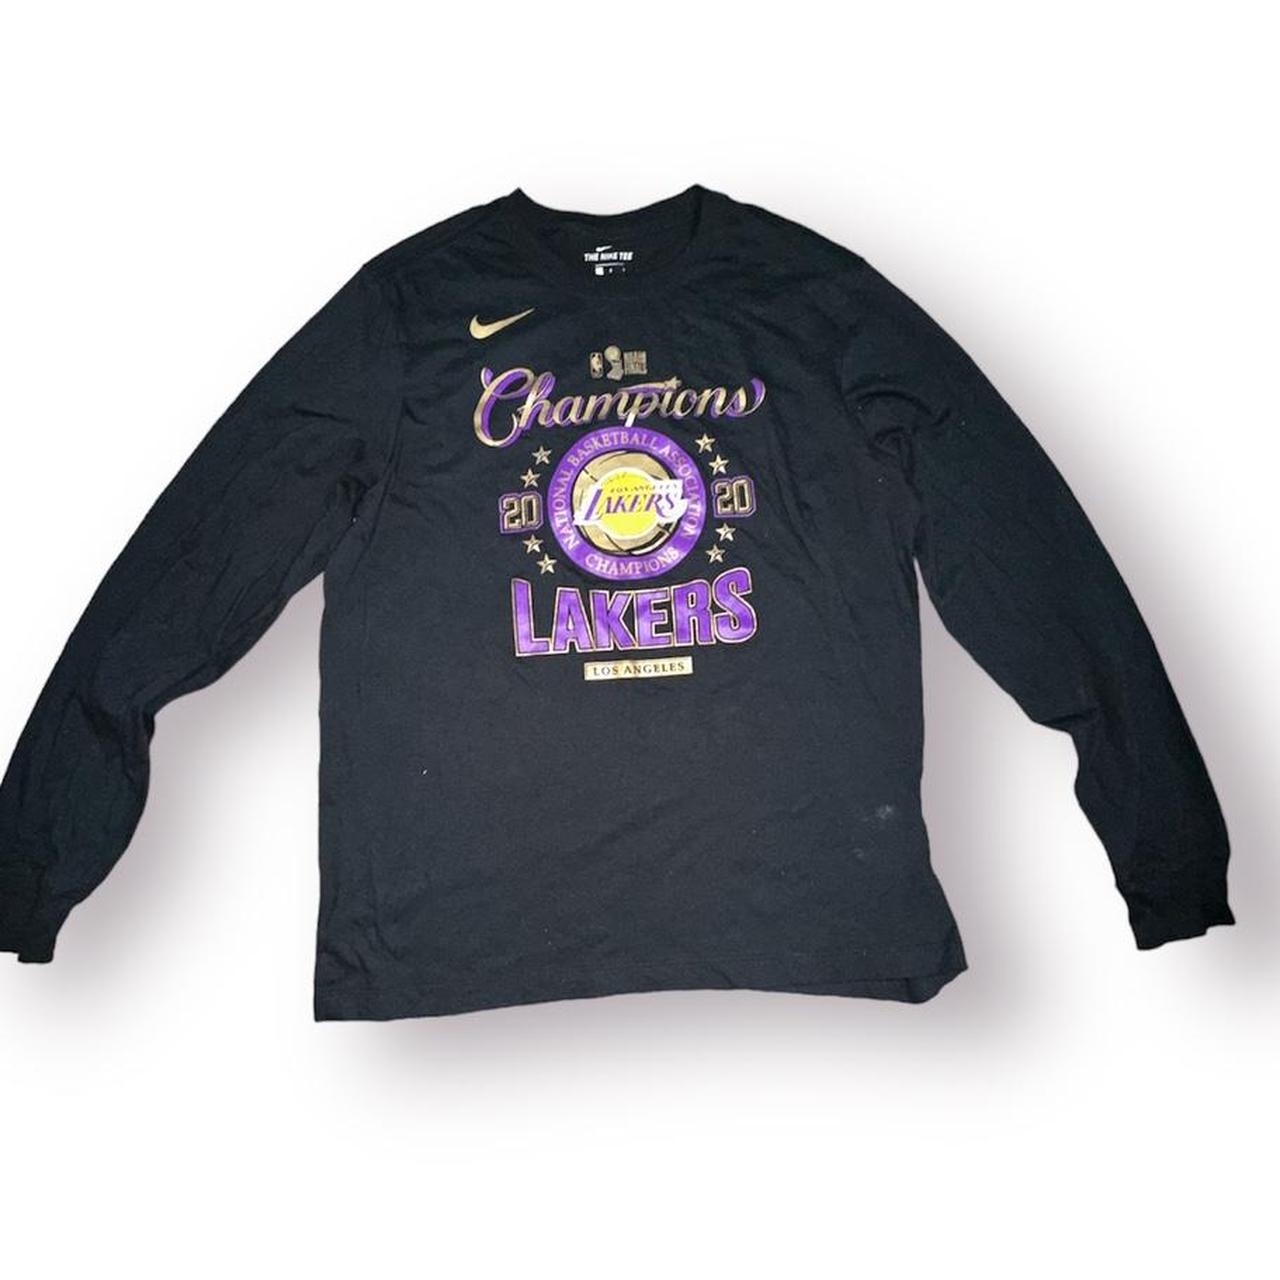 Los Angeles Lakers NBA Finals Championships 2020 Black T-Shirt